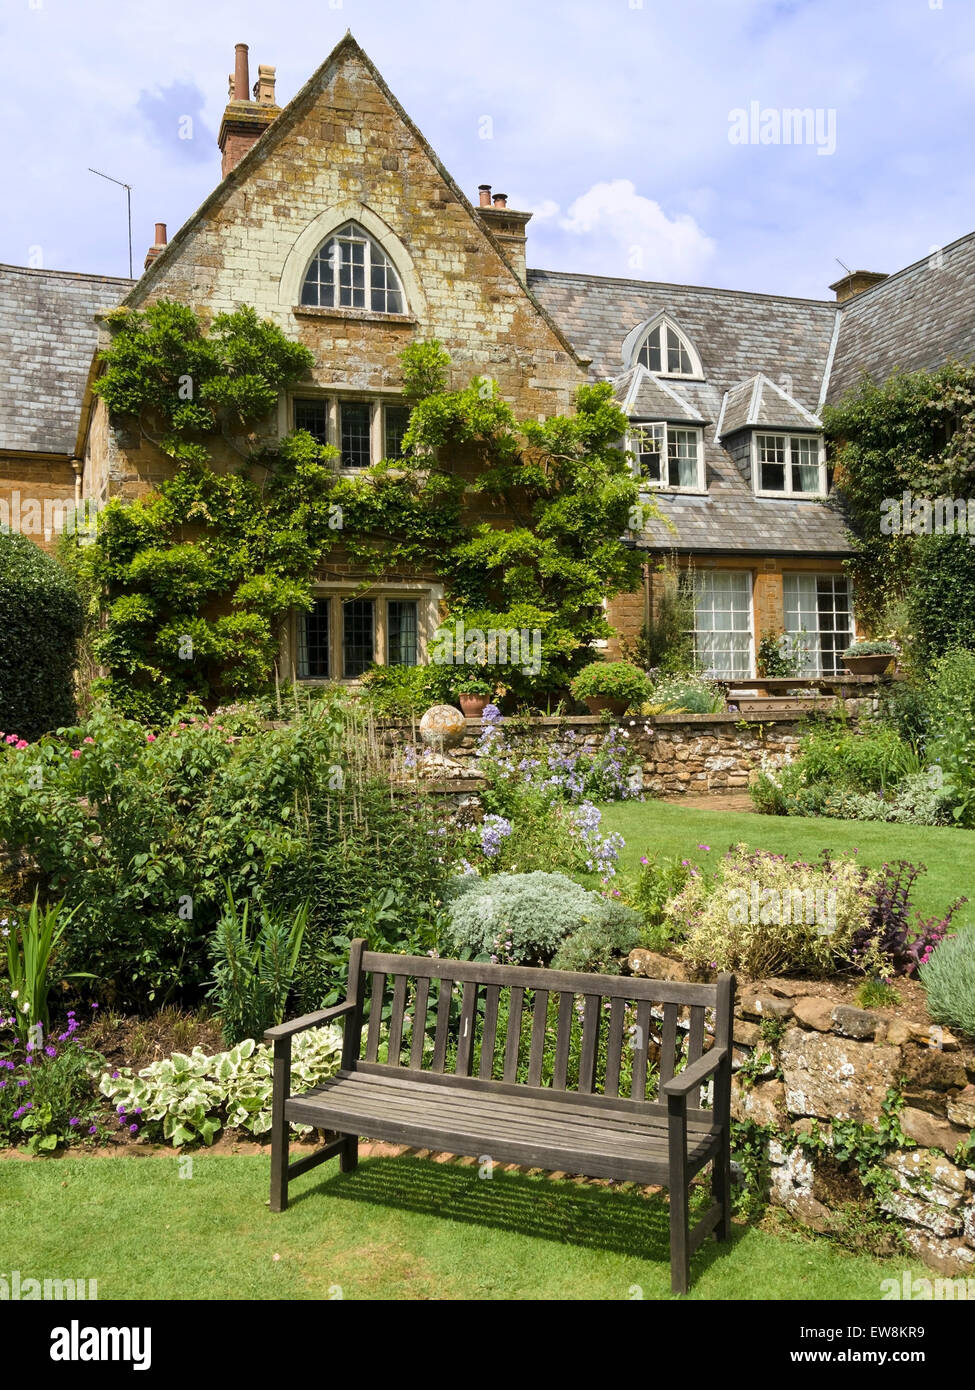 Coton-Herrenhaus und Gärten, Coton, Northamptonshire, England, UK. Stockfoto